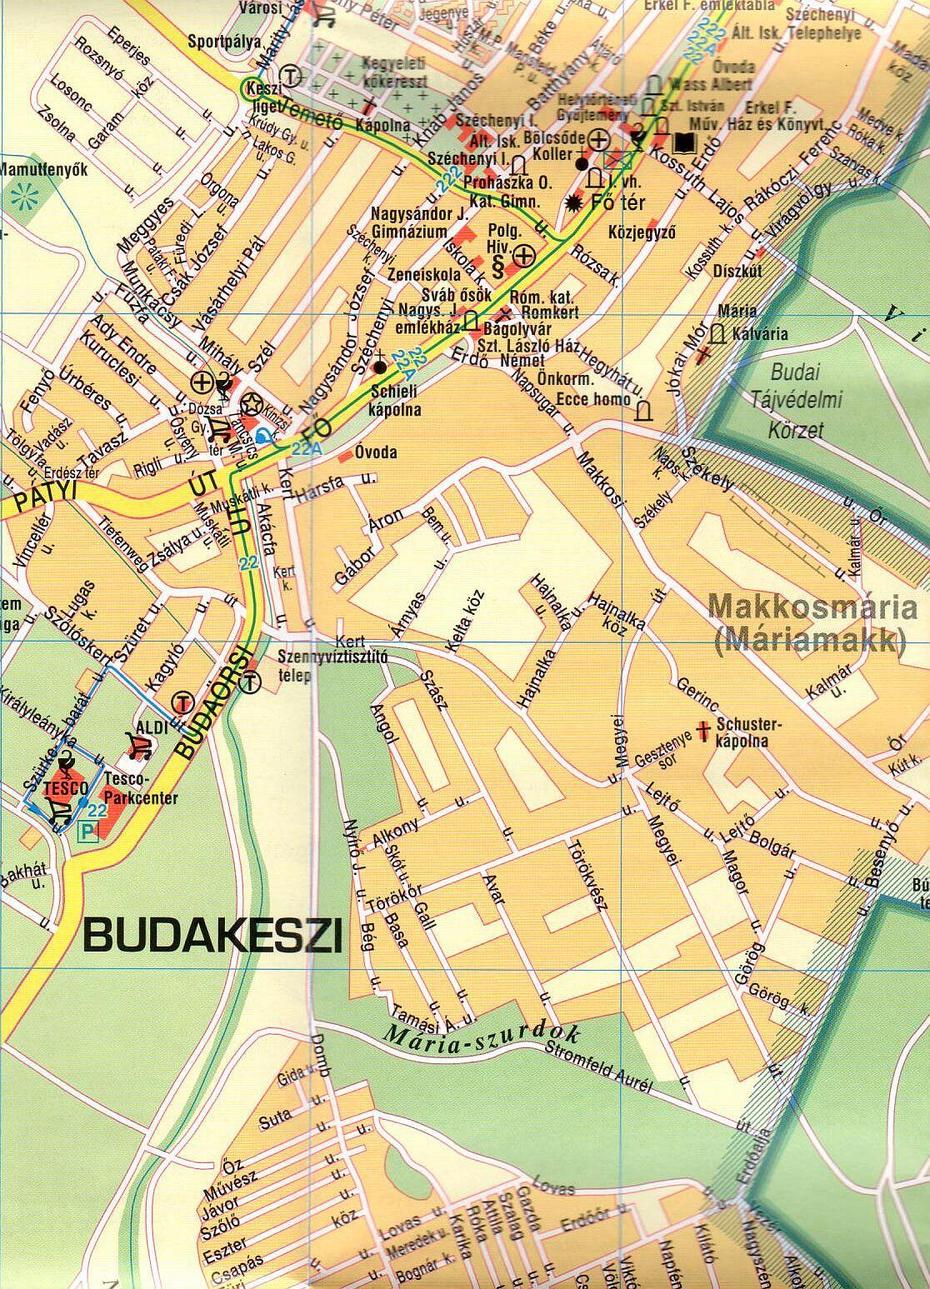 Budaors, Budakeszi, Torokbalint  Map.Hu, Budaörs, Hungary, Of Budapest City, Budapest Hungary Tourist